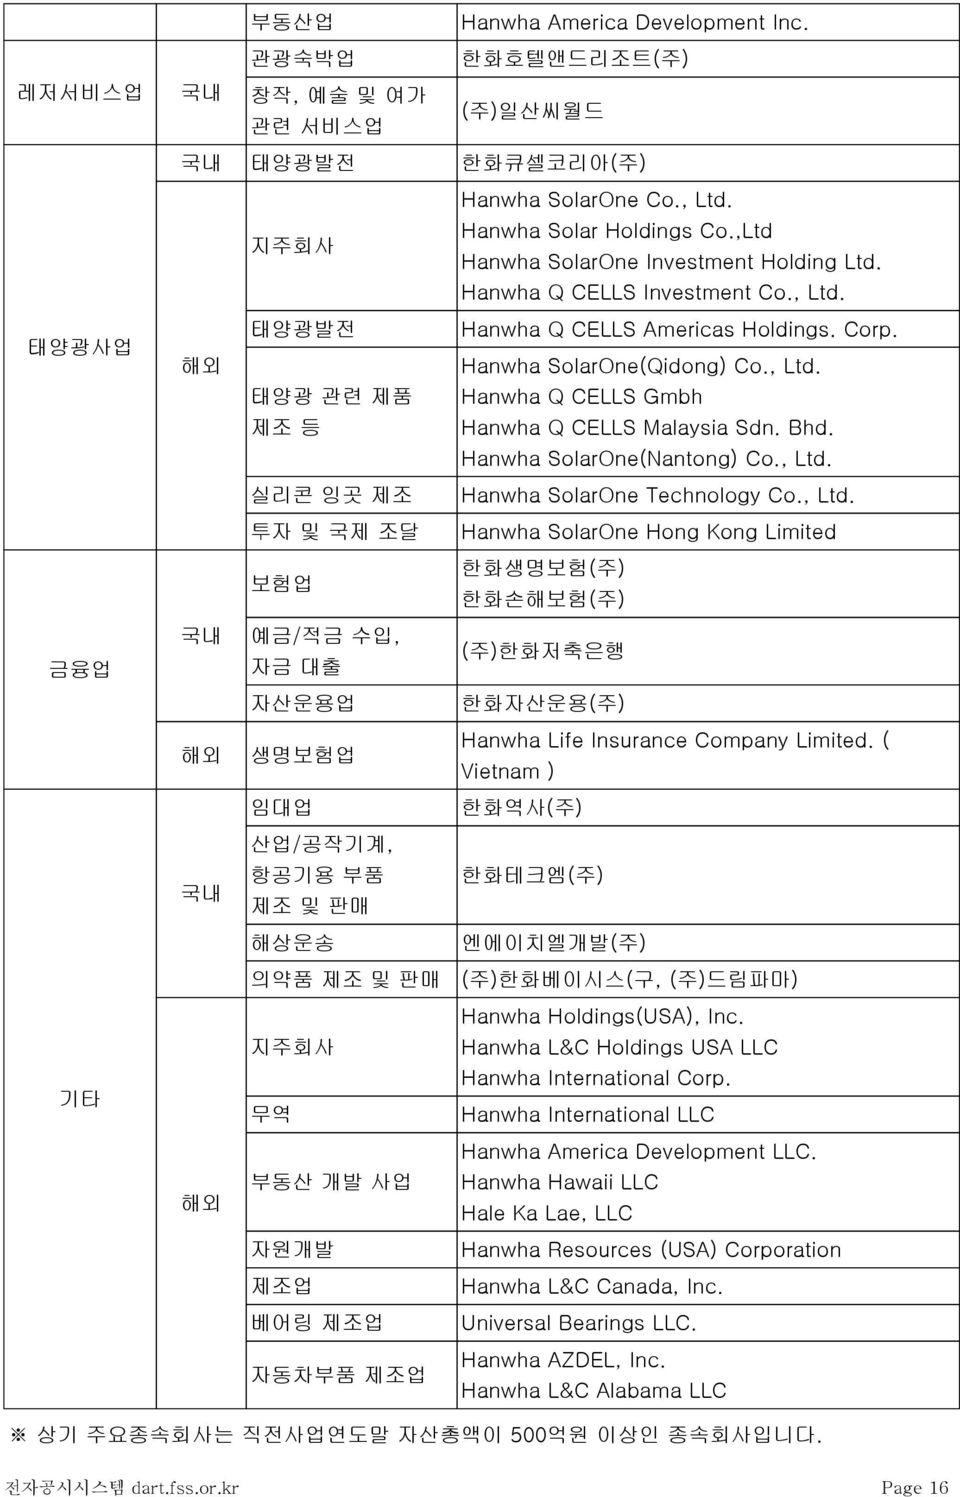 Bhd. Hanwha SolarOne(Nantong) Co., Ltd.